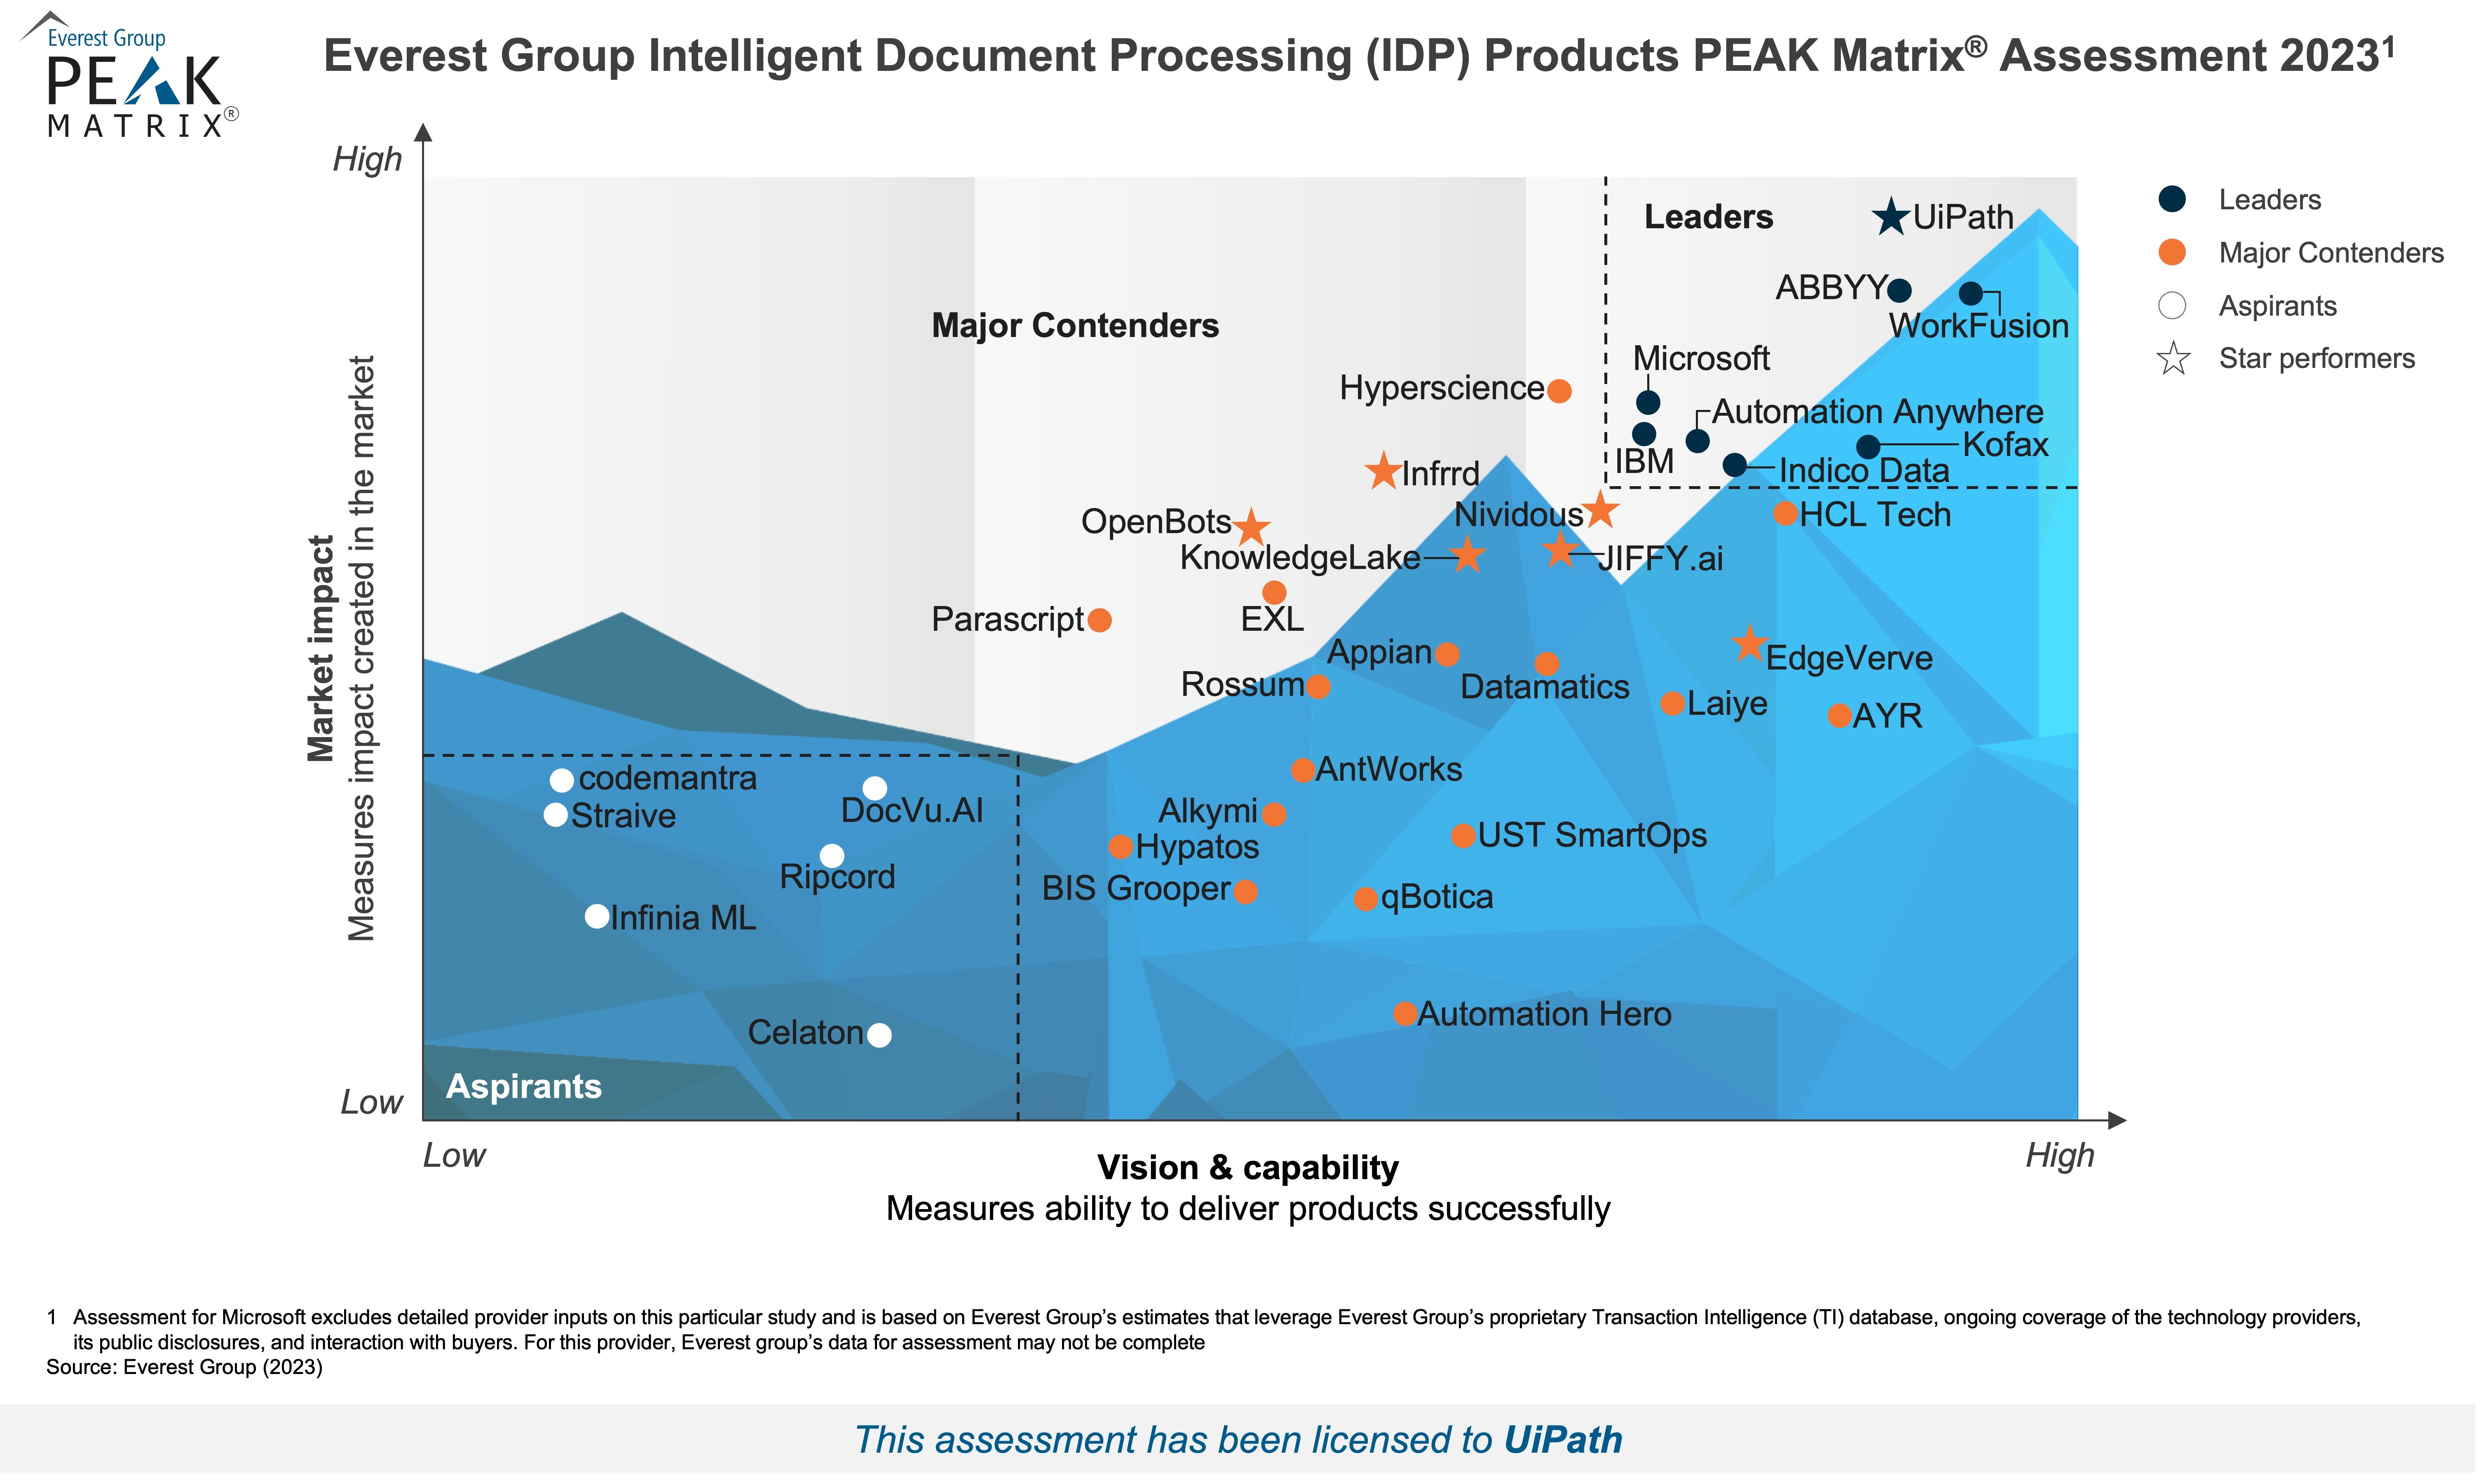 Everest Group Intelligent Document Processing Products PEAK Matrix® Assessment 2023